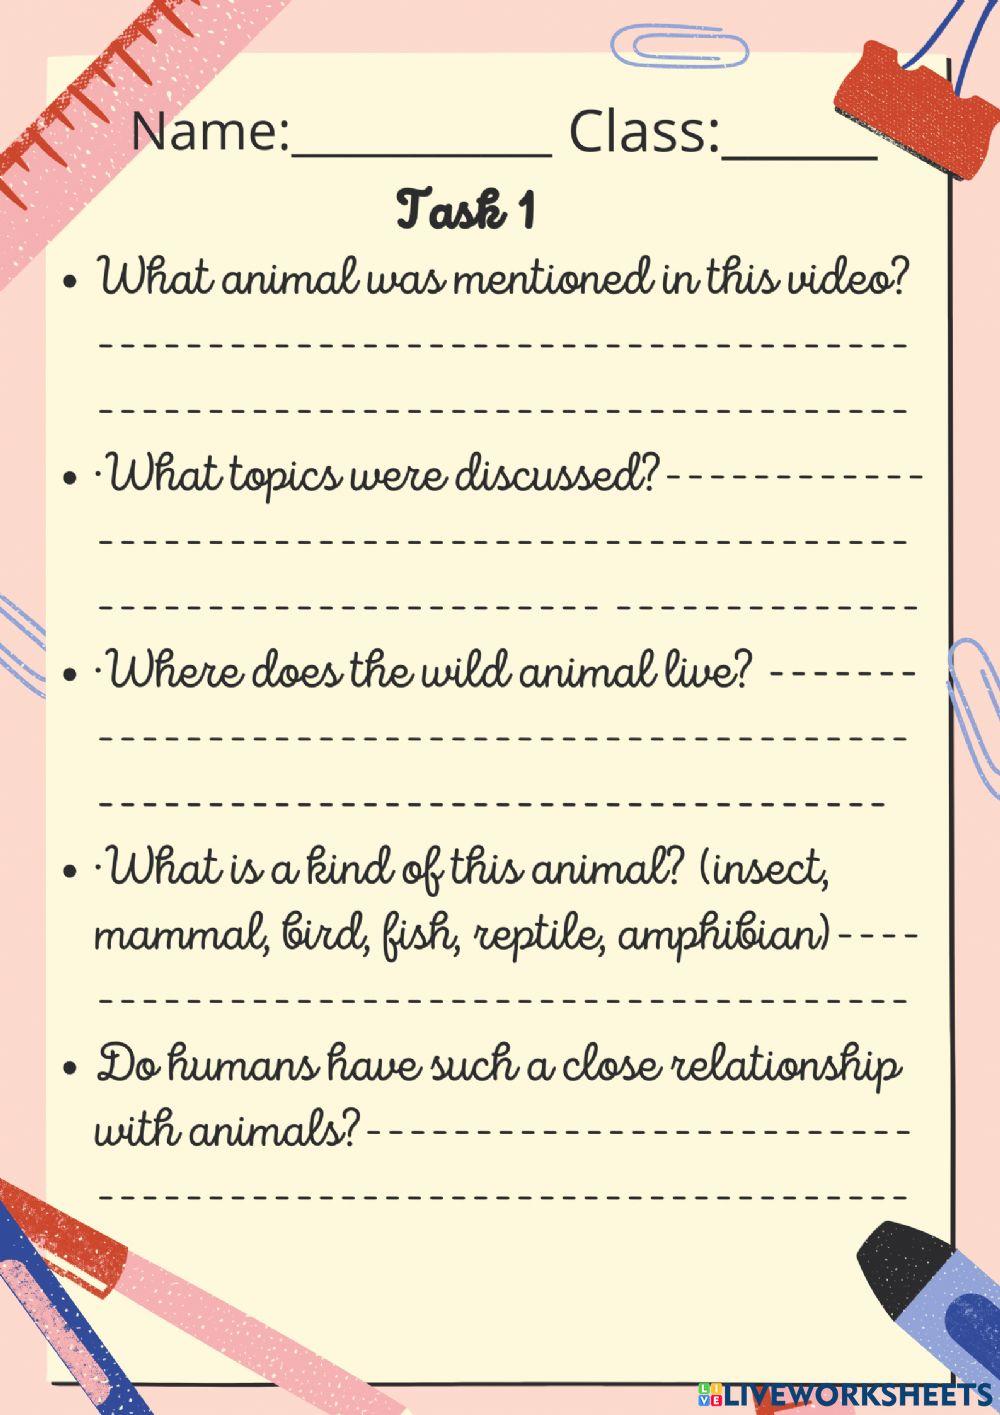 Task 1: THE LIFE OF WILD ANIMALS